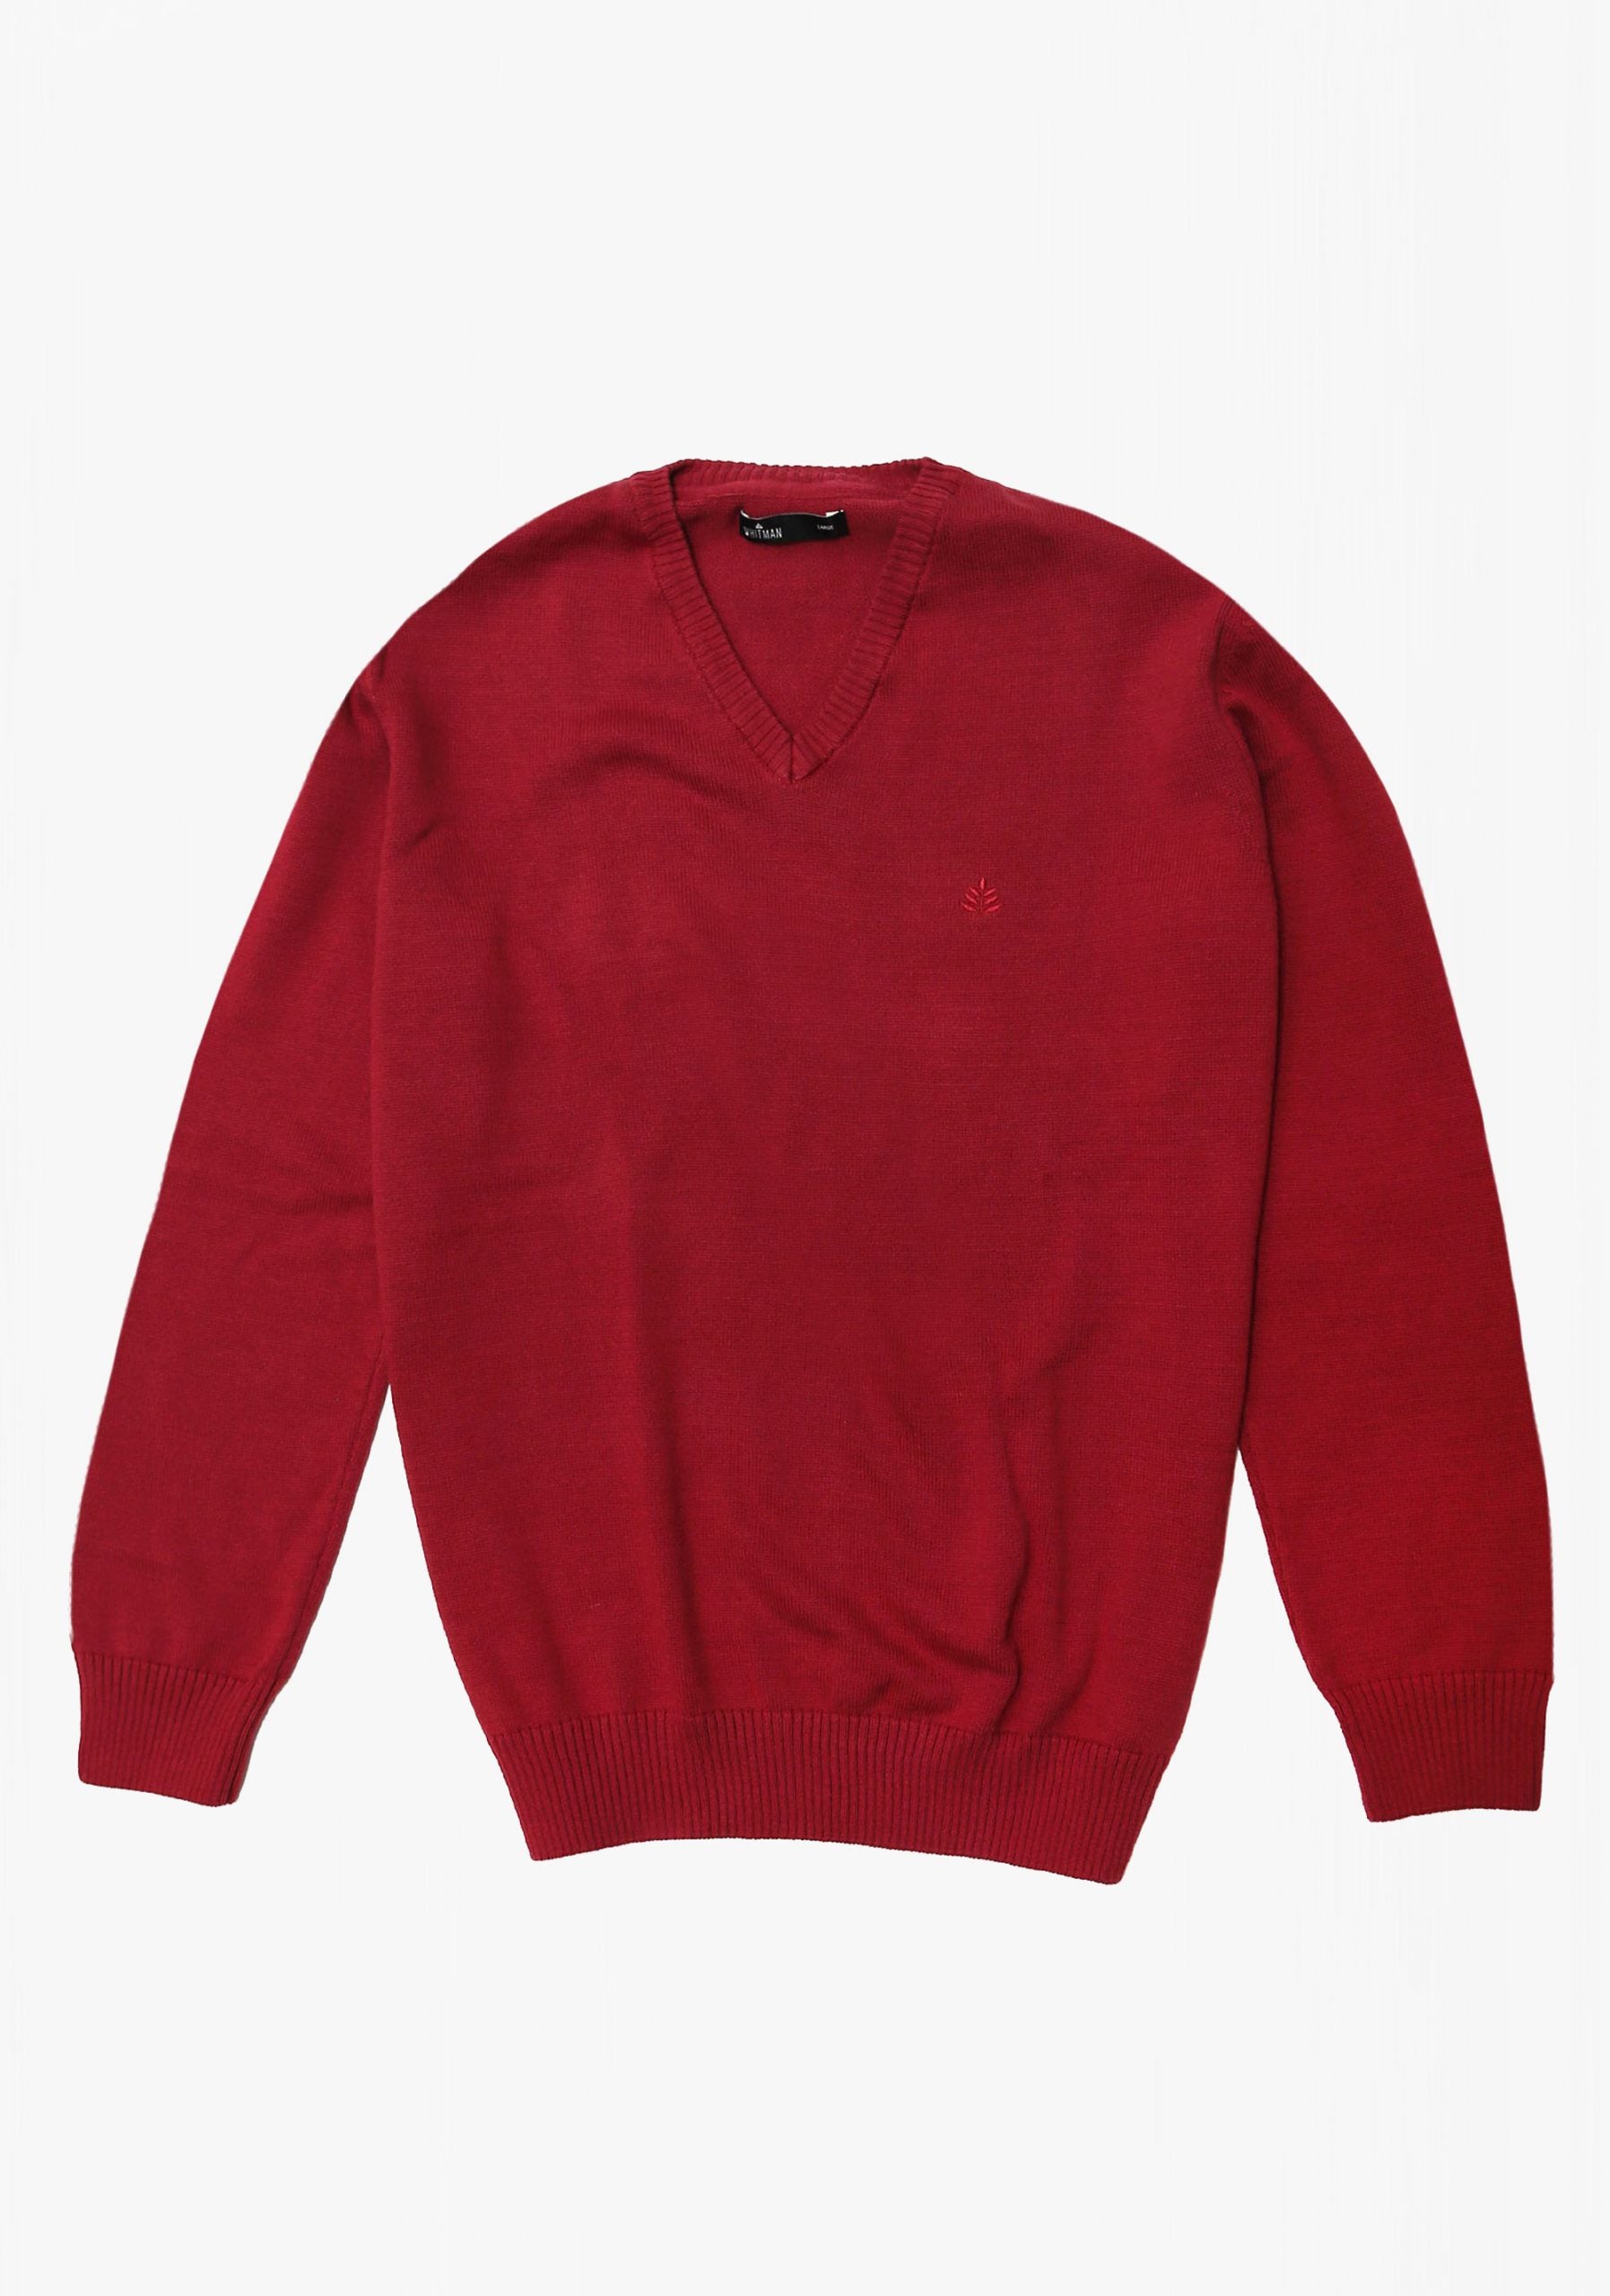 New York Red Sweater